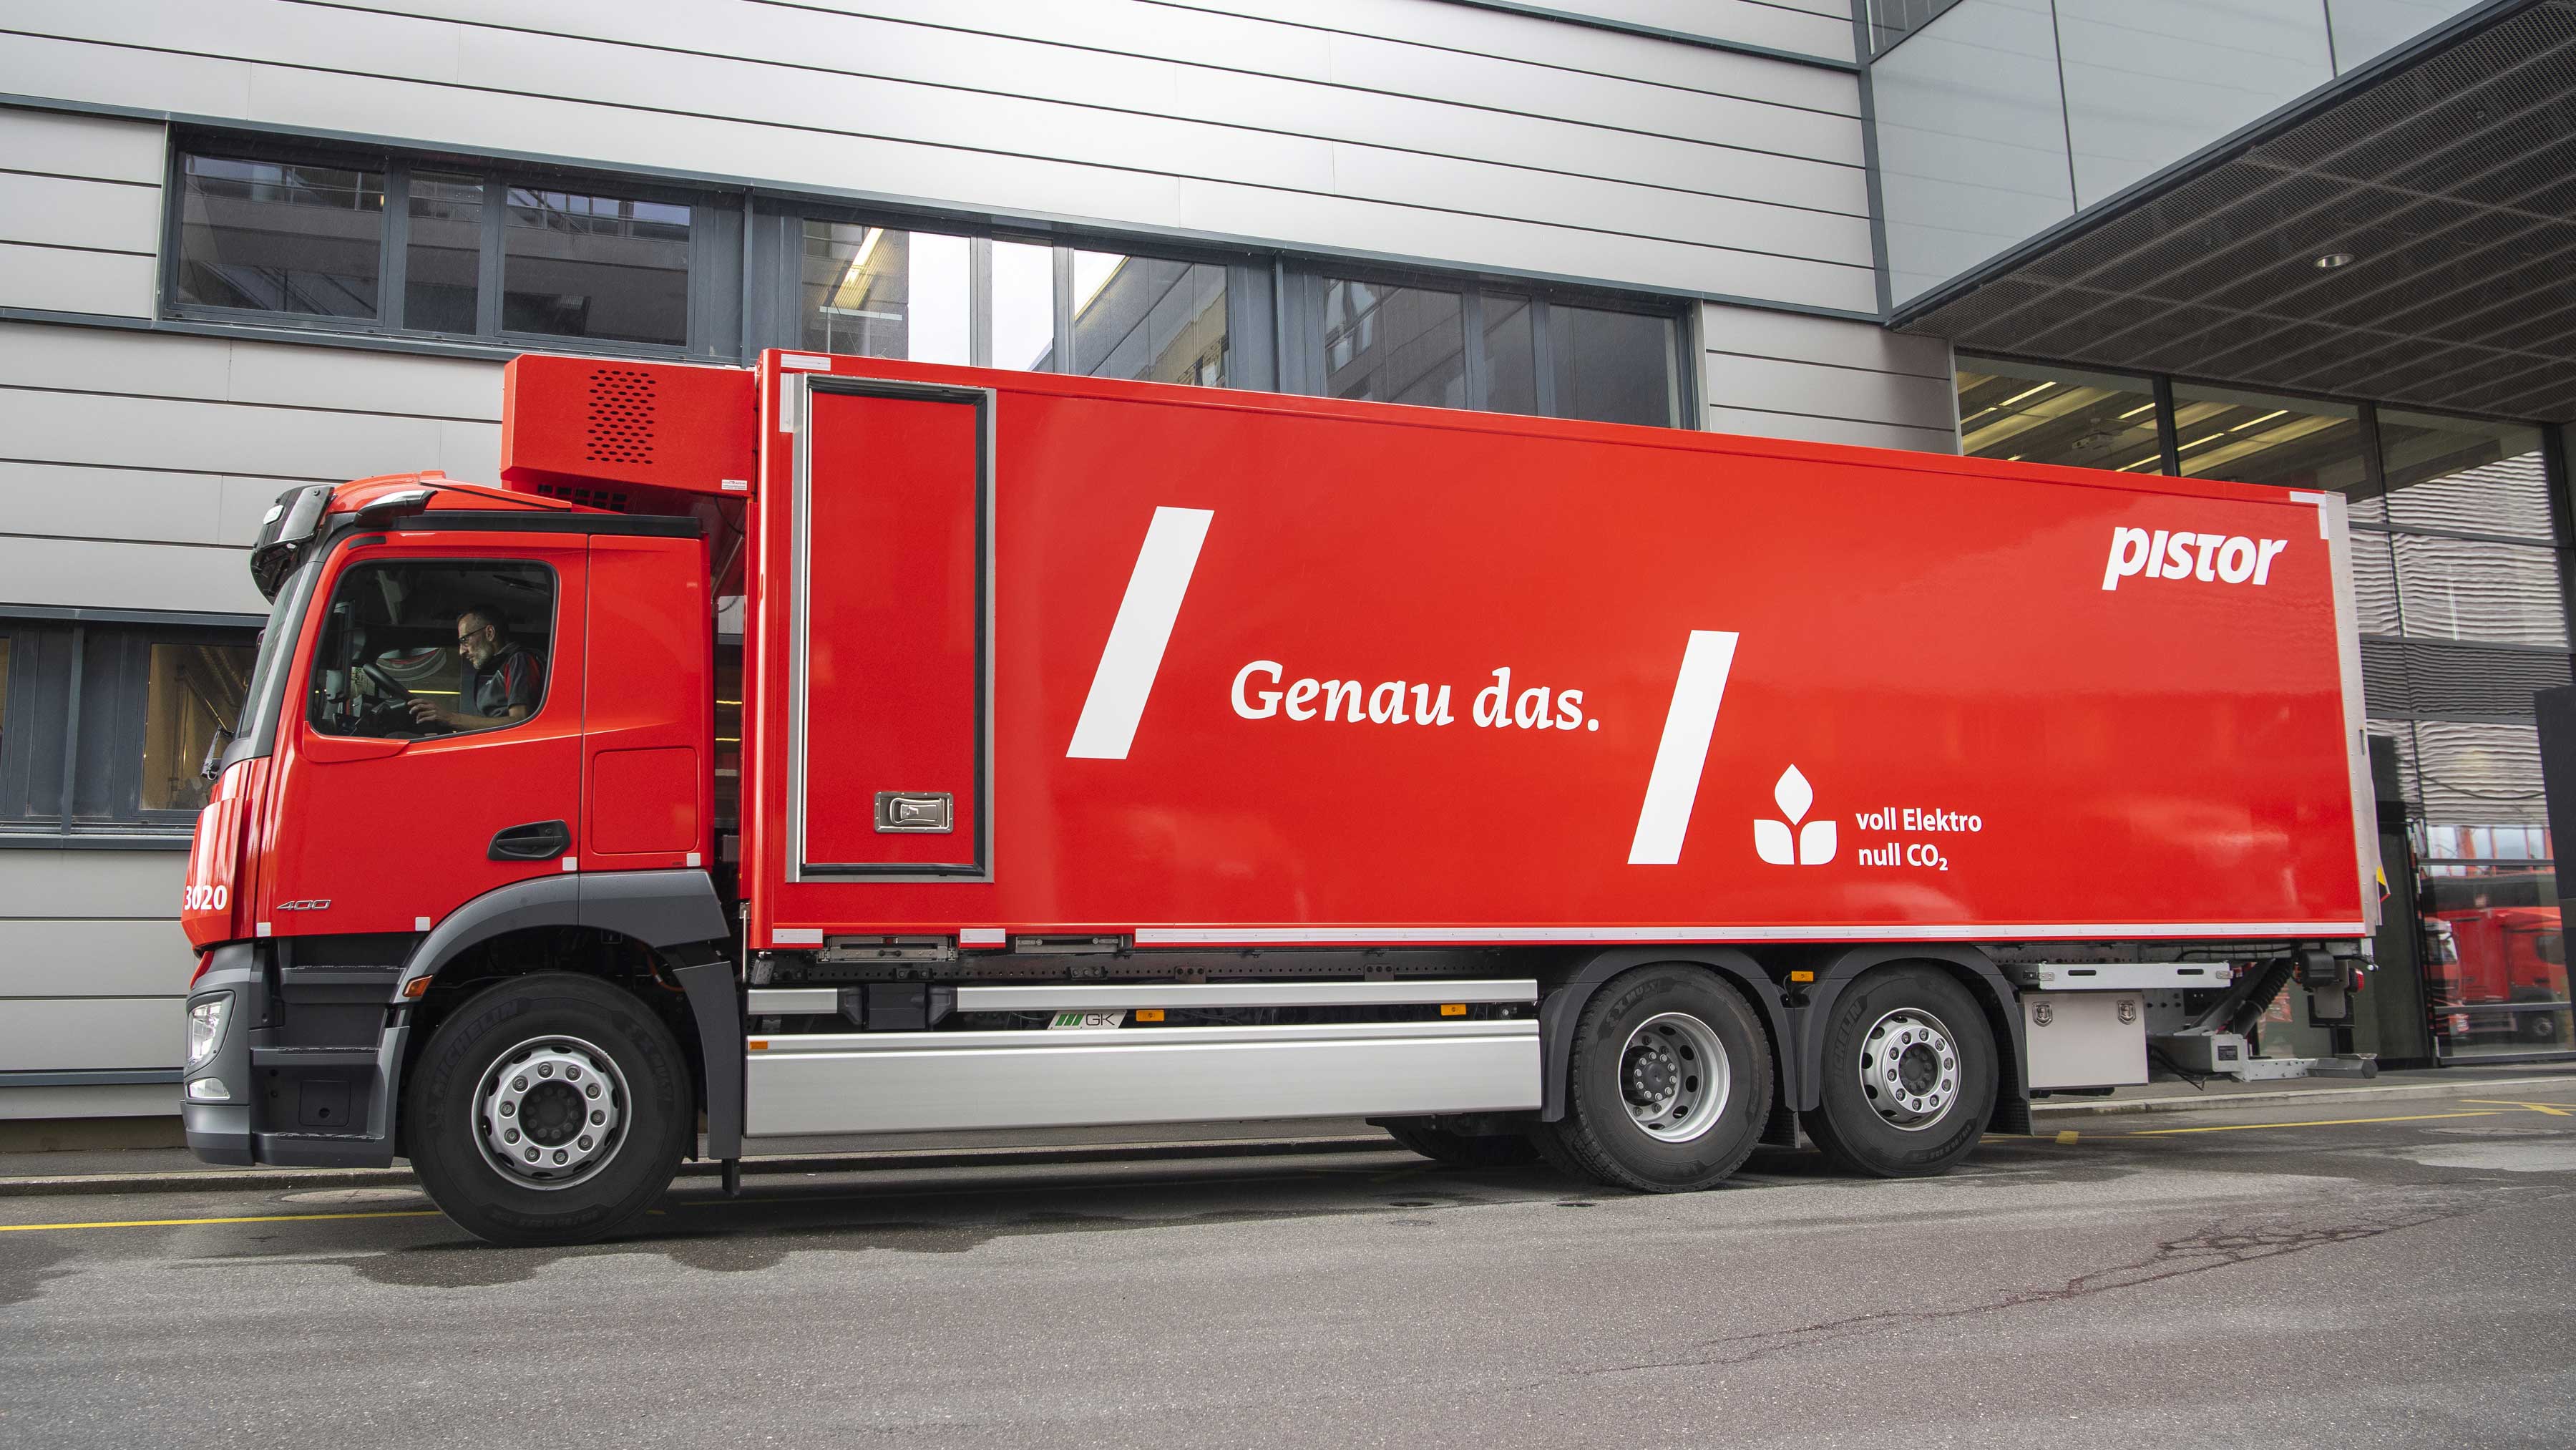 Red electric truck with the wordmark ‘Genau das.’ set in Tuna Italic and the Pistor logo